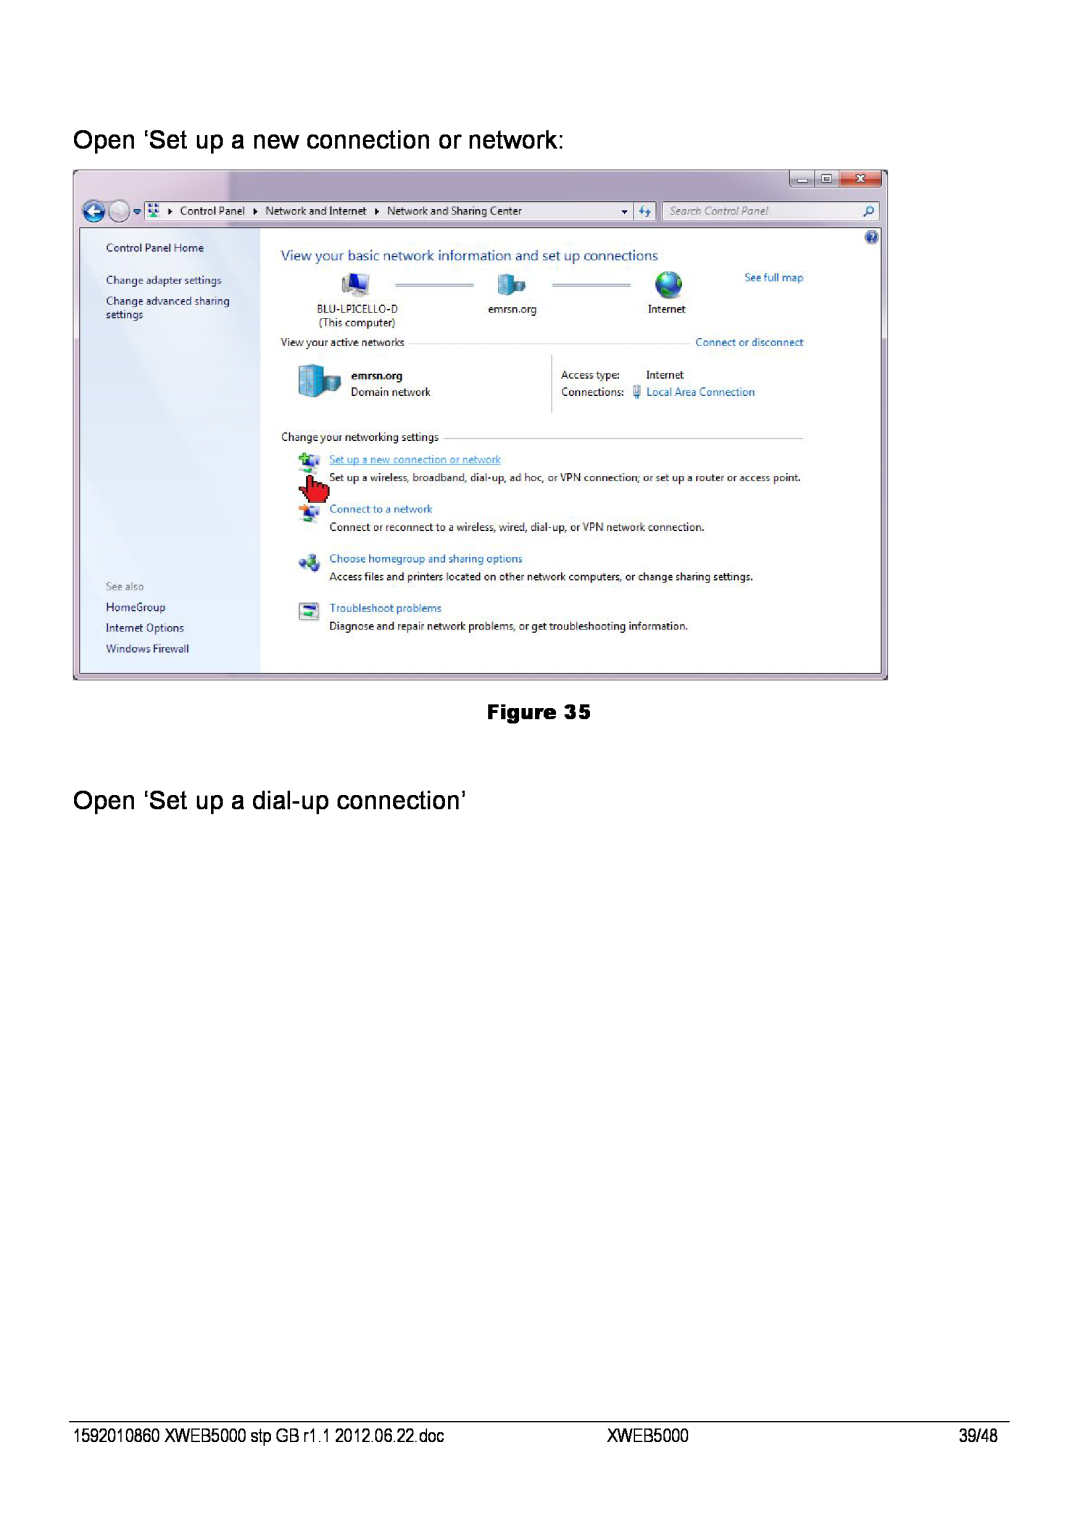 Emerson XWEB5000 manual Open ‘Set up a new connection or network, Open ‘Set up a dial-upconnection’, Figure, 39/48 